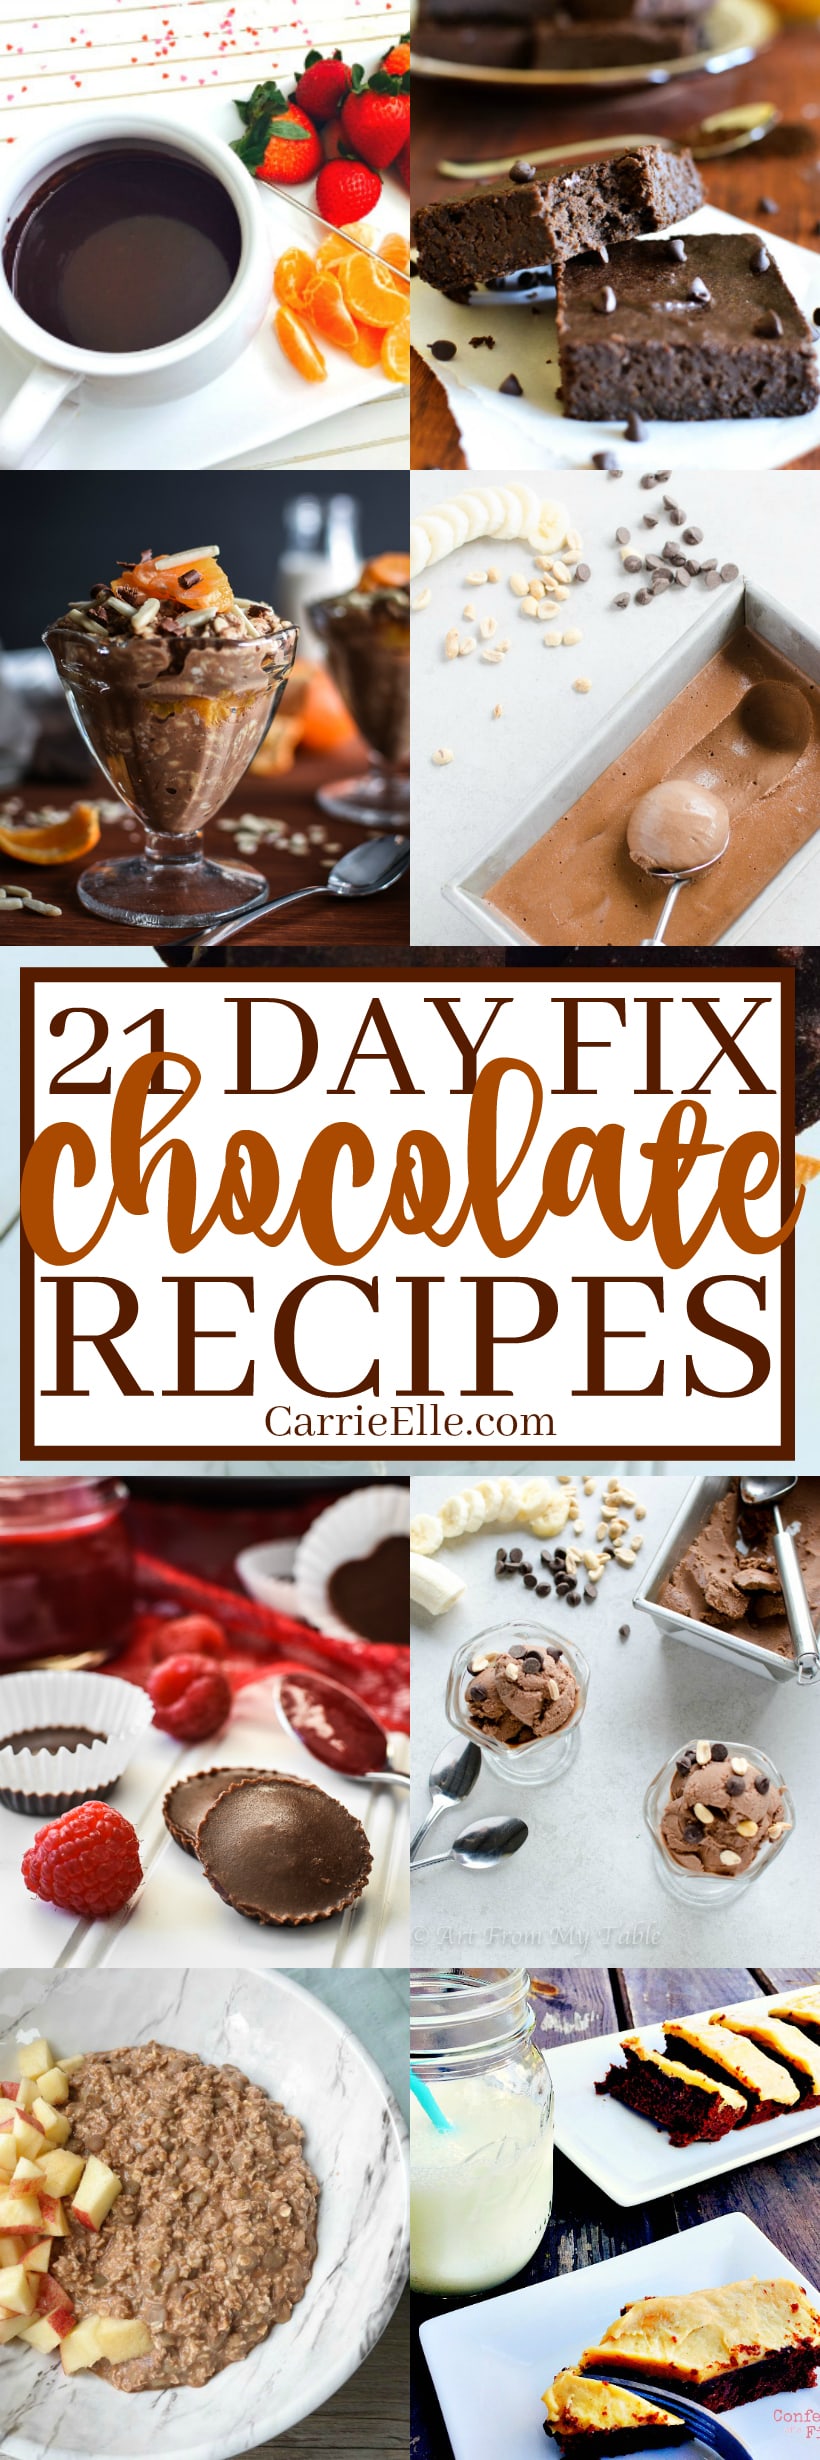 21 Day Fix Chocolate Recipes